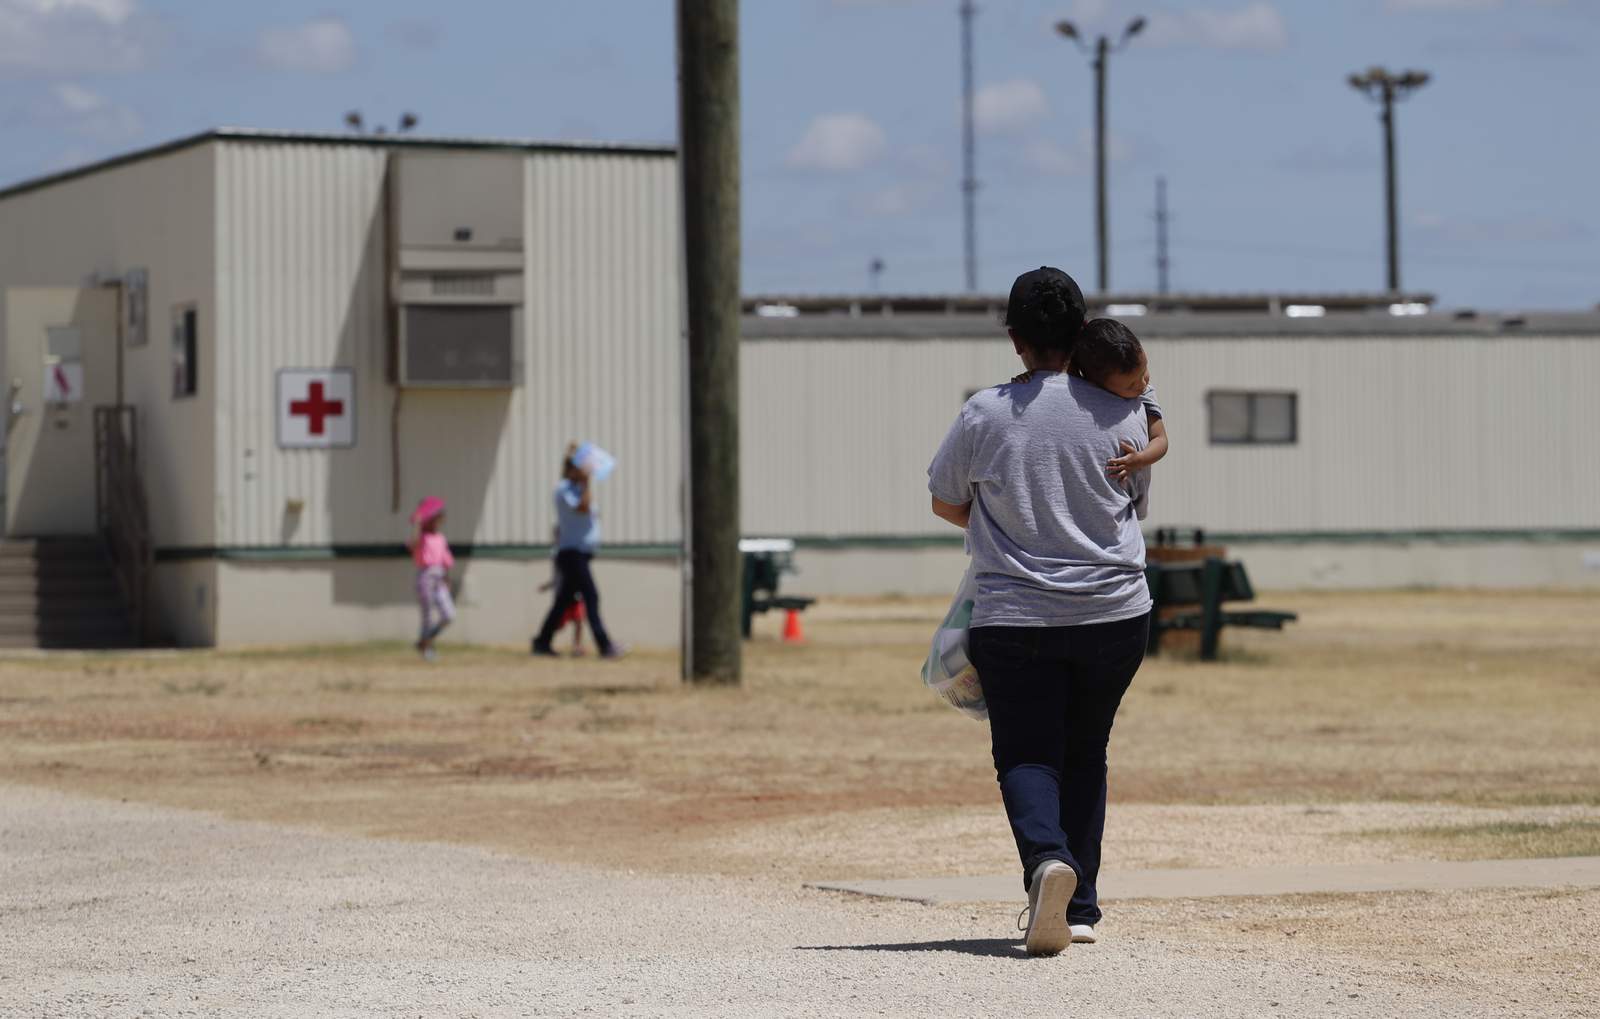 Child border crossings surging, straining US facilities